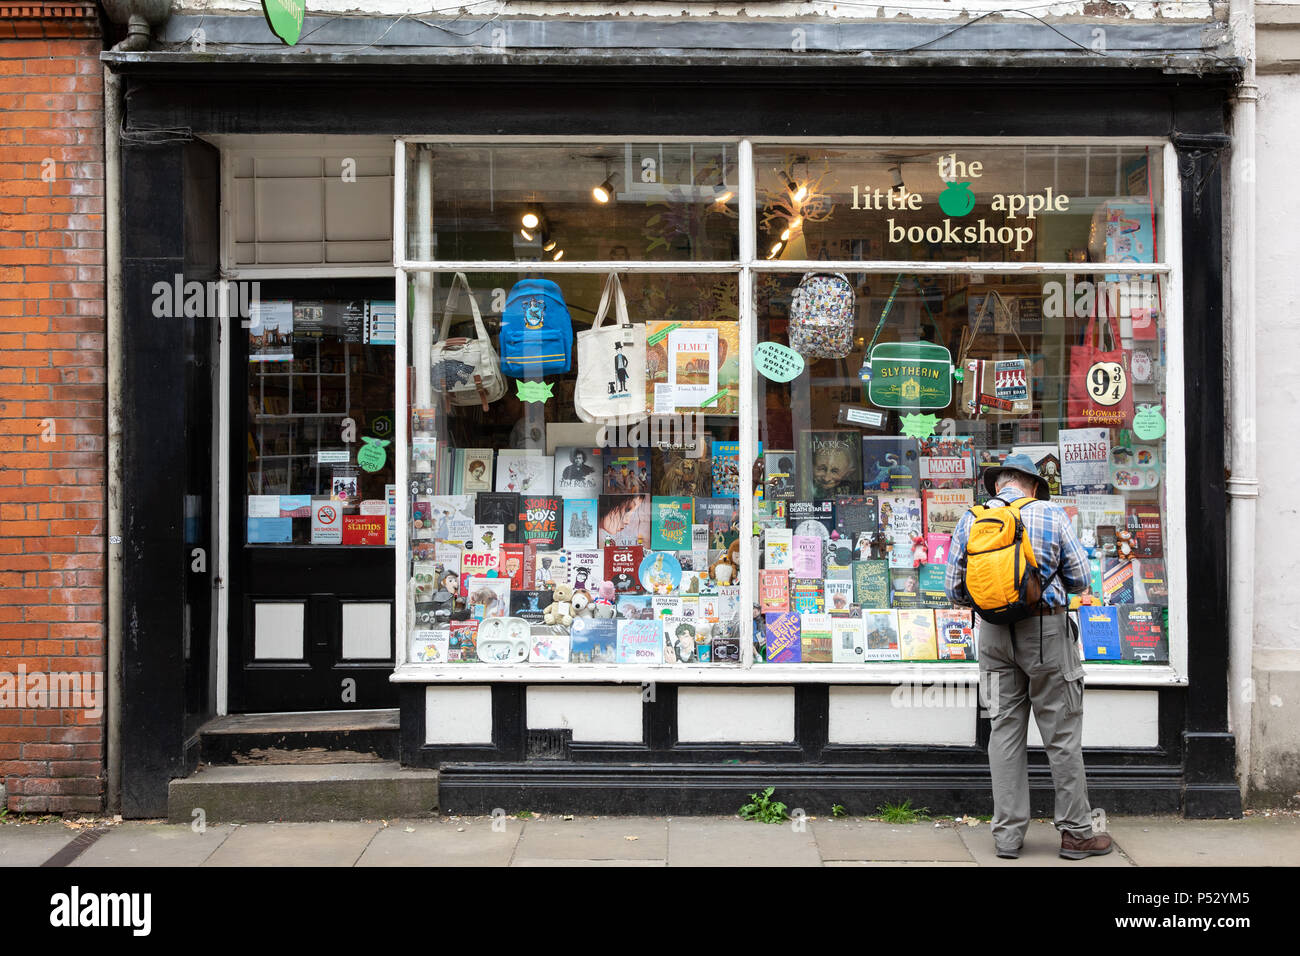 The Little Apple book shop in York, Uk Stock Photo